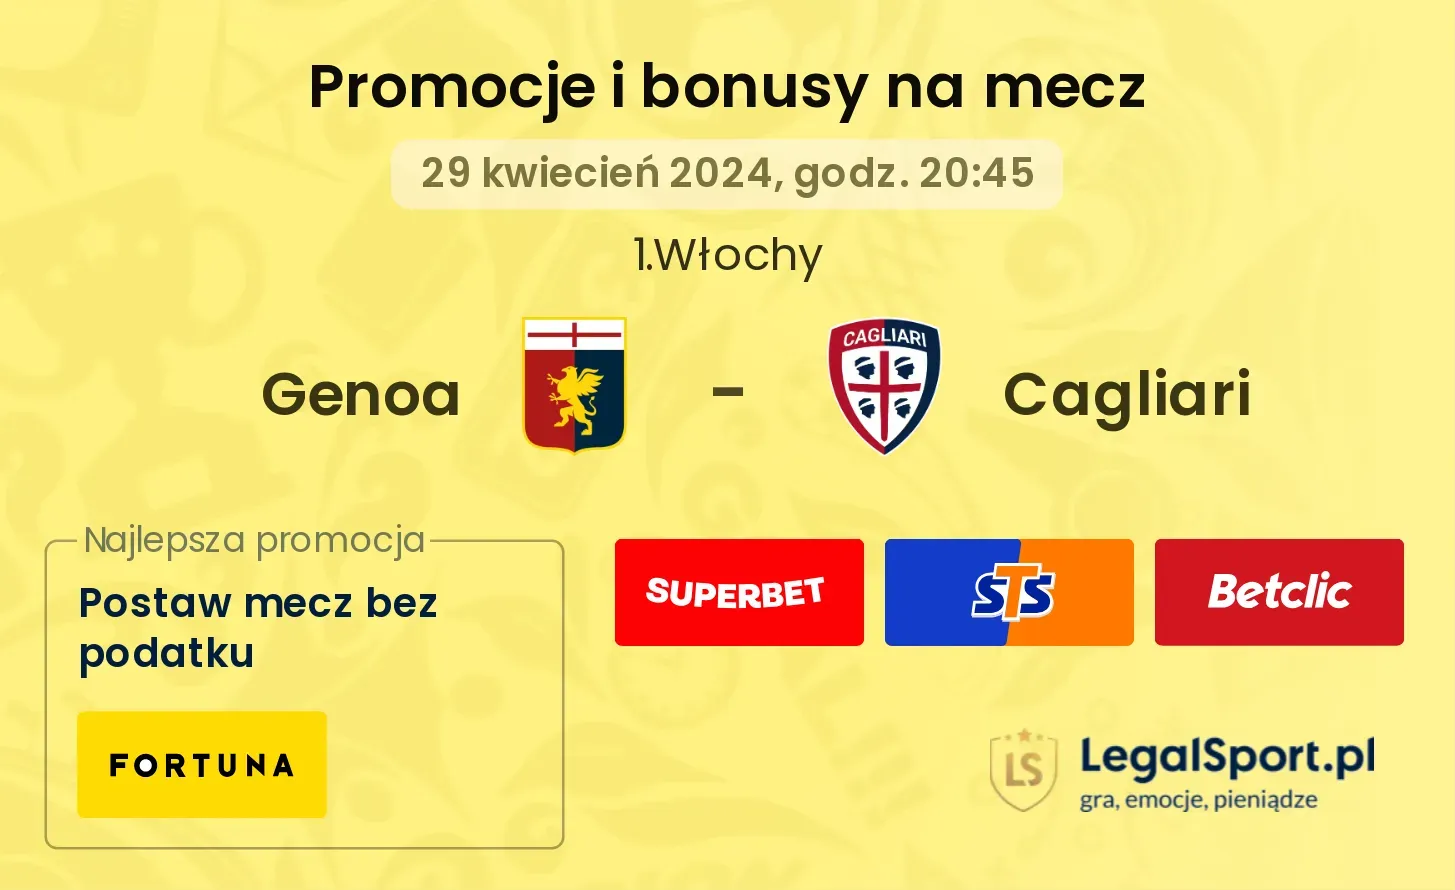 Genoa - Cagliari promocje bonusy na mecz